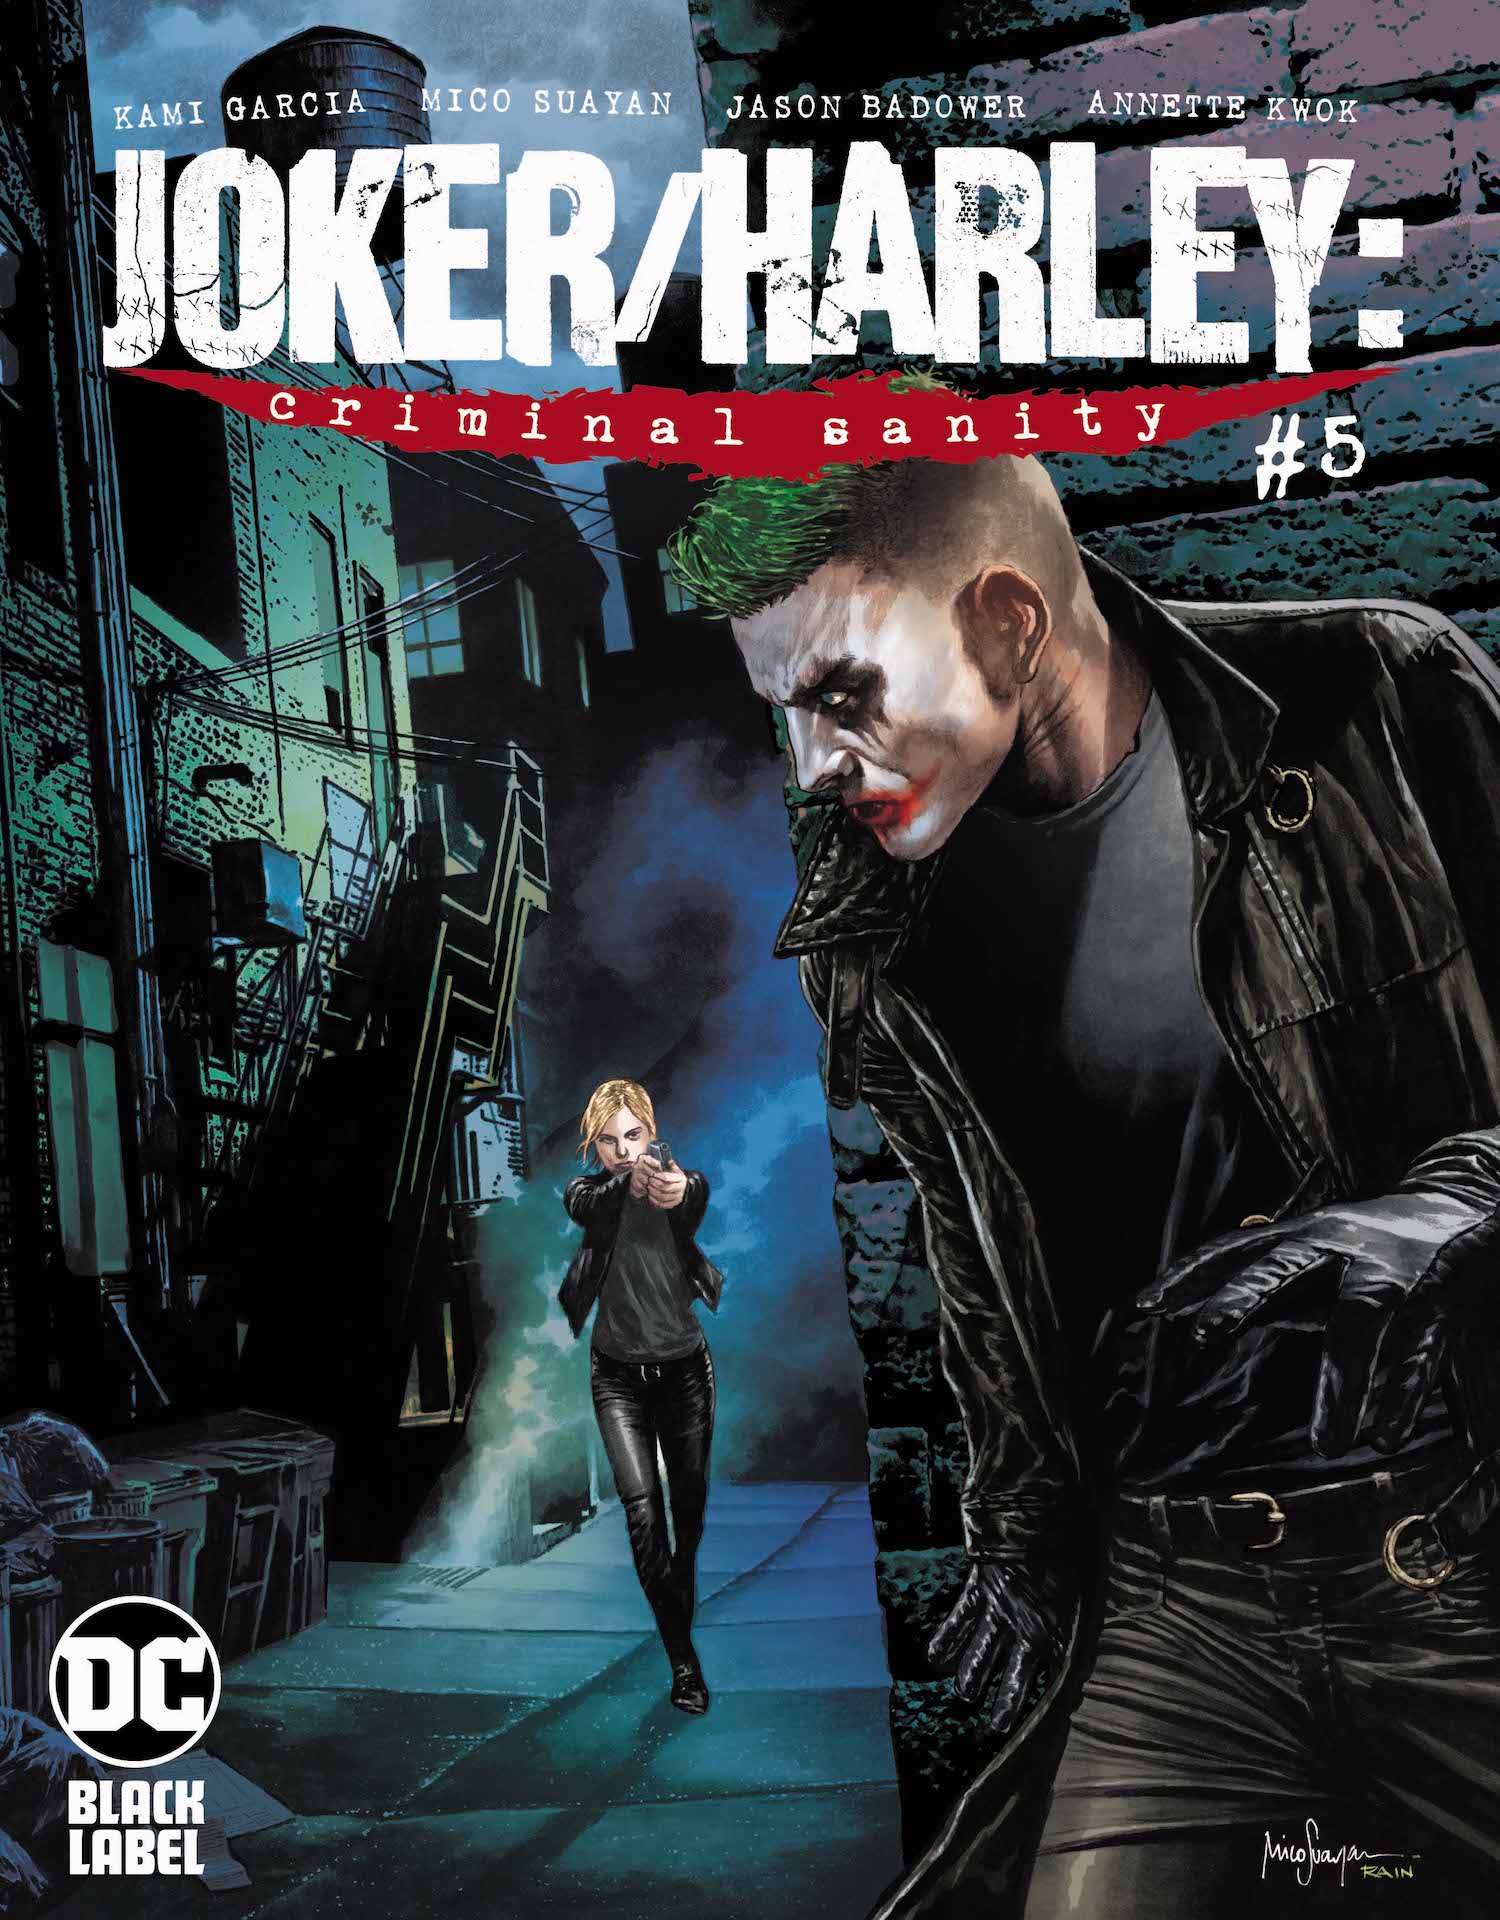 DC Preview: Joker/Harley: Criminal Sanity #5